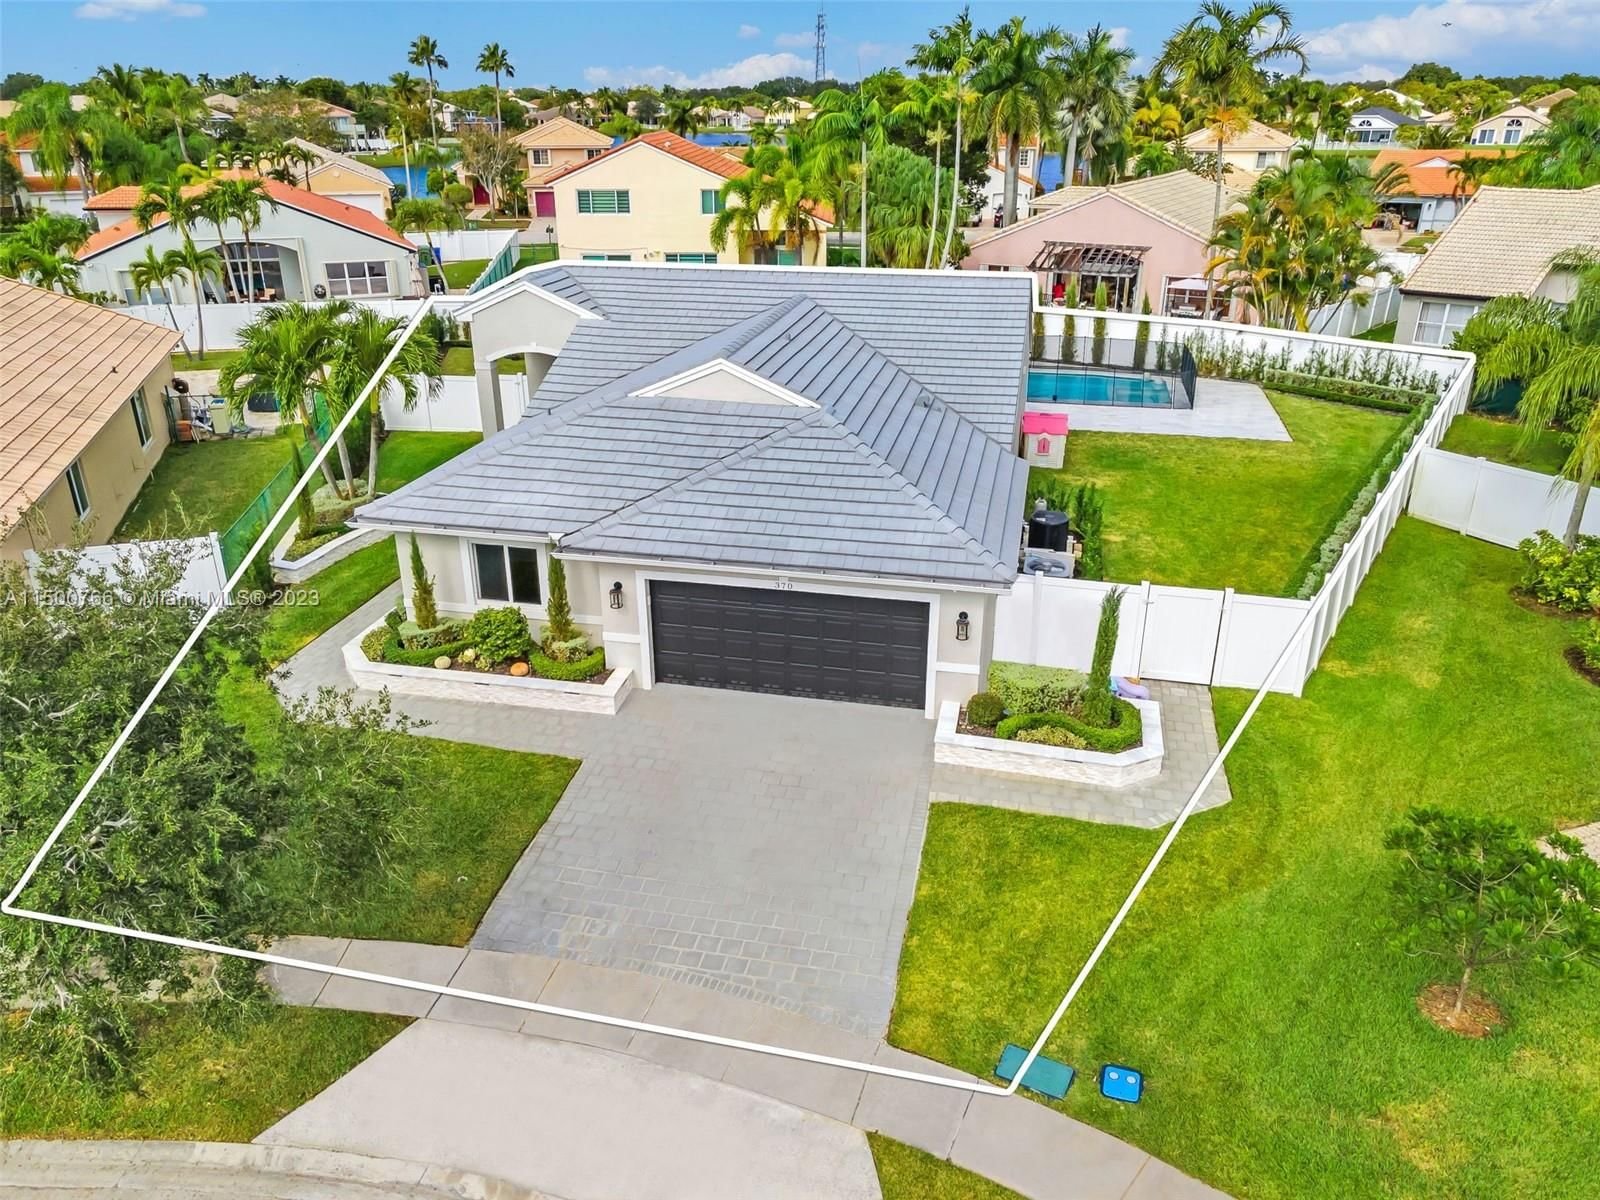 Real estate property located at 370 164th Ave, Broward County, HEFTLER HOMES AT PEMBROKE, Pembroke Pines, FL